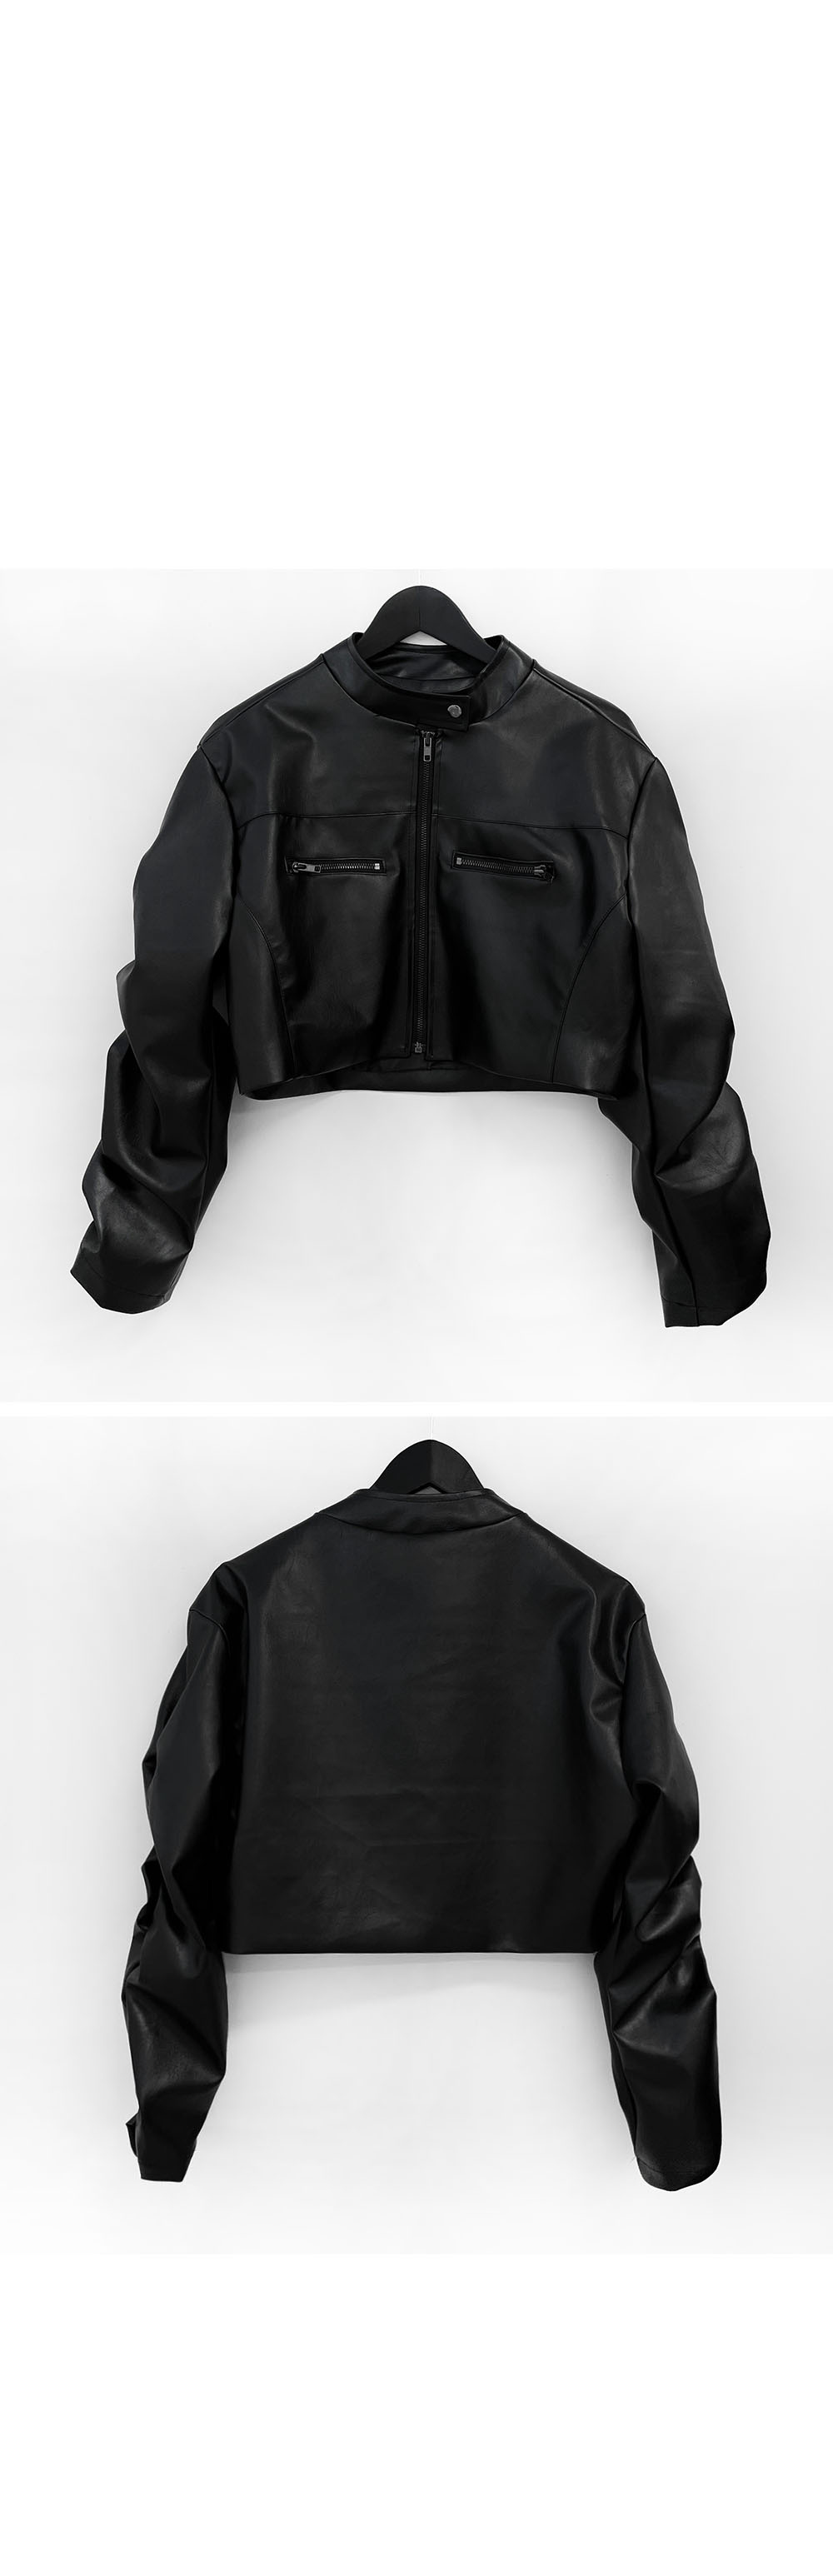 Jacket charcoal color image-S1L8